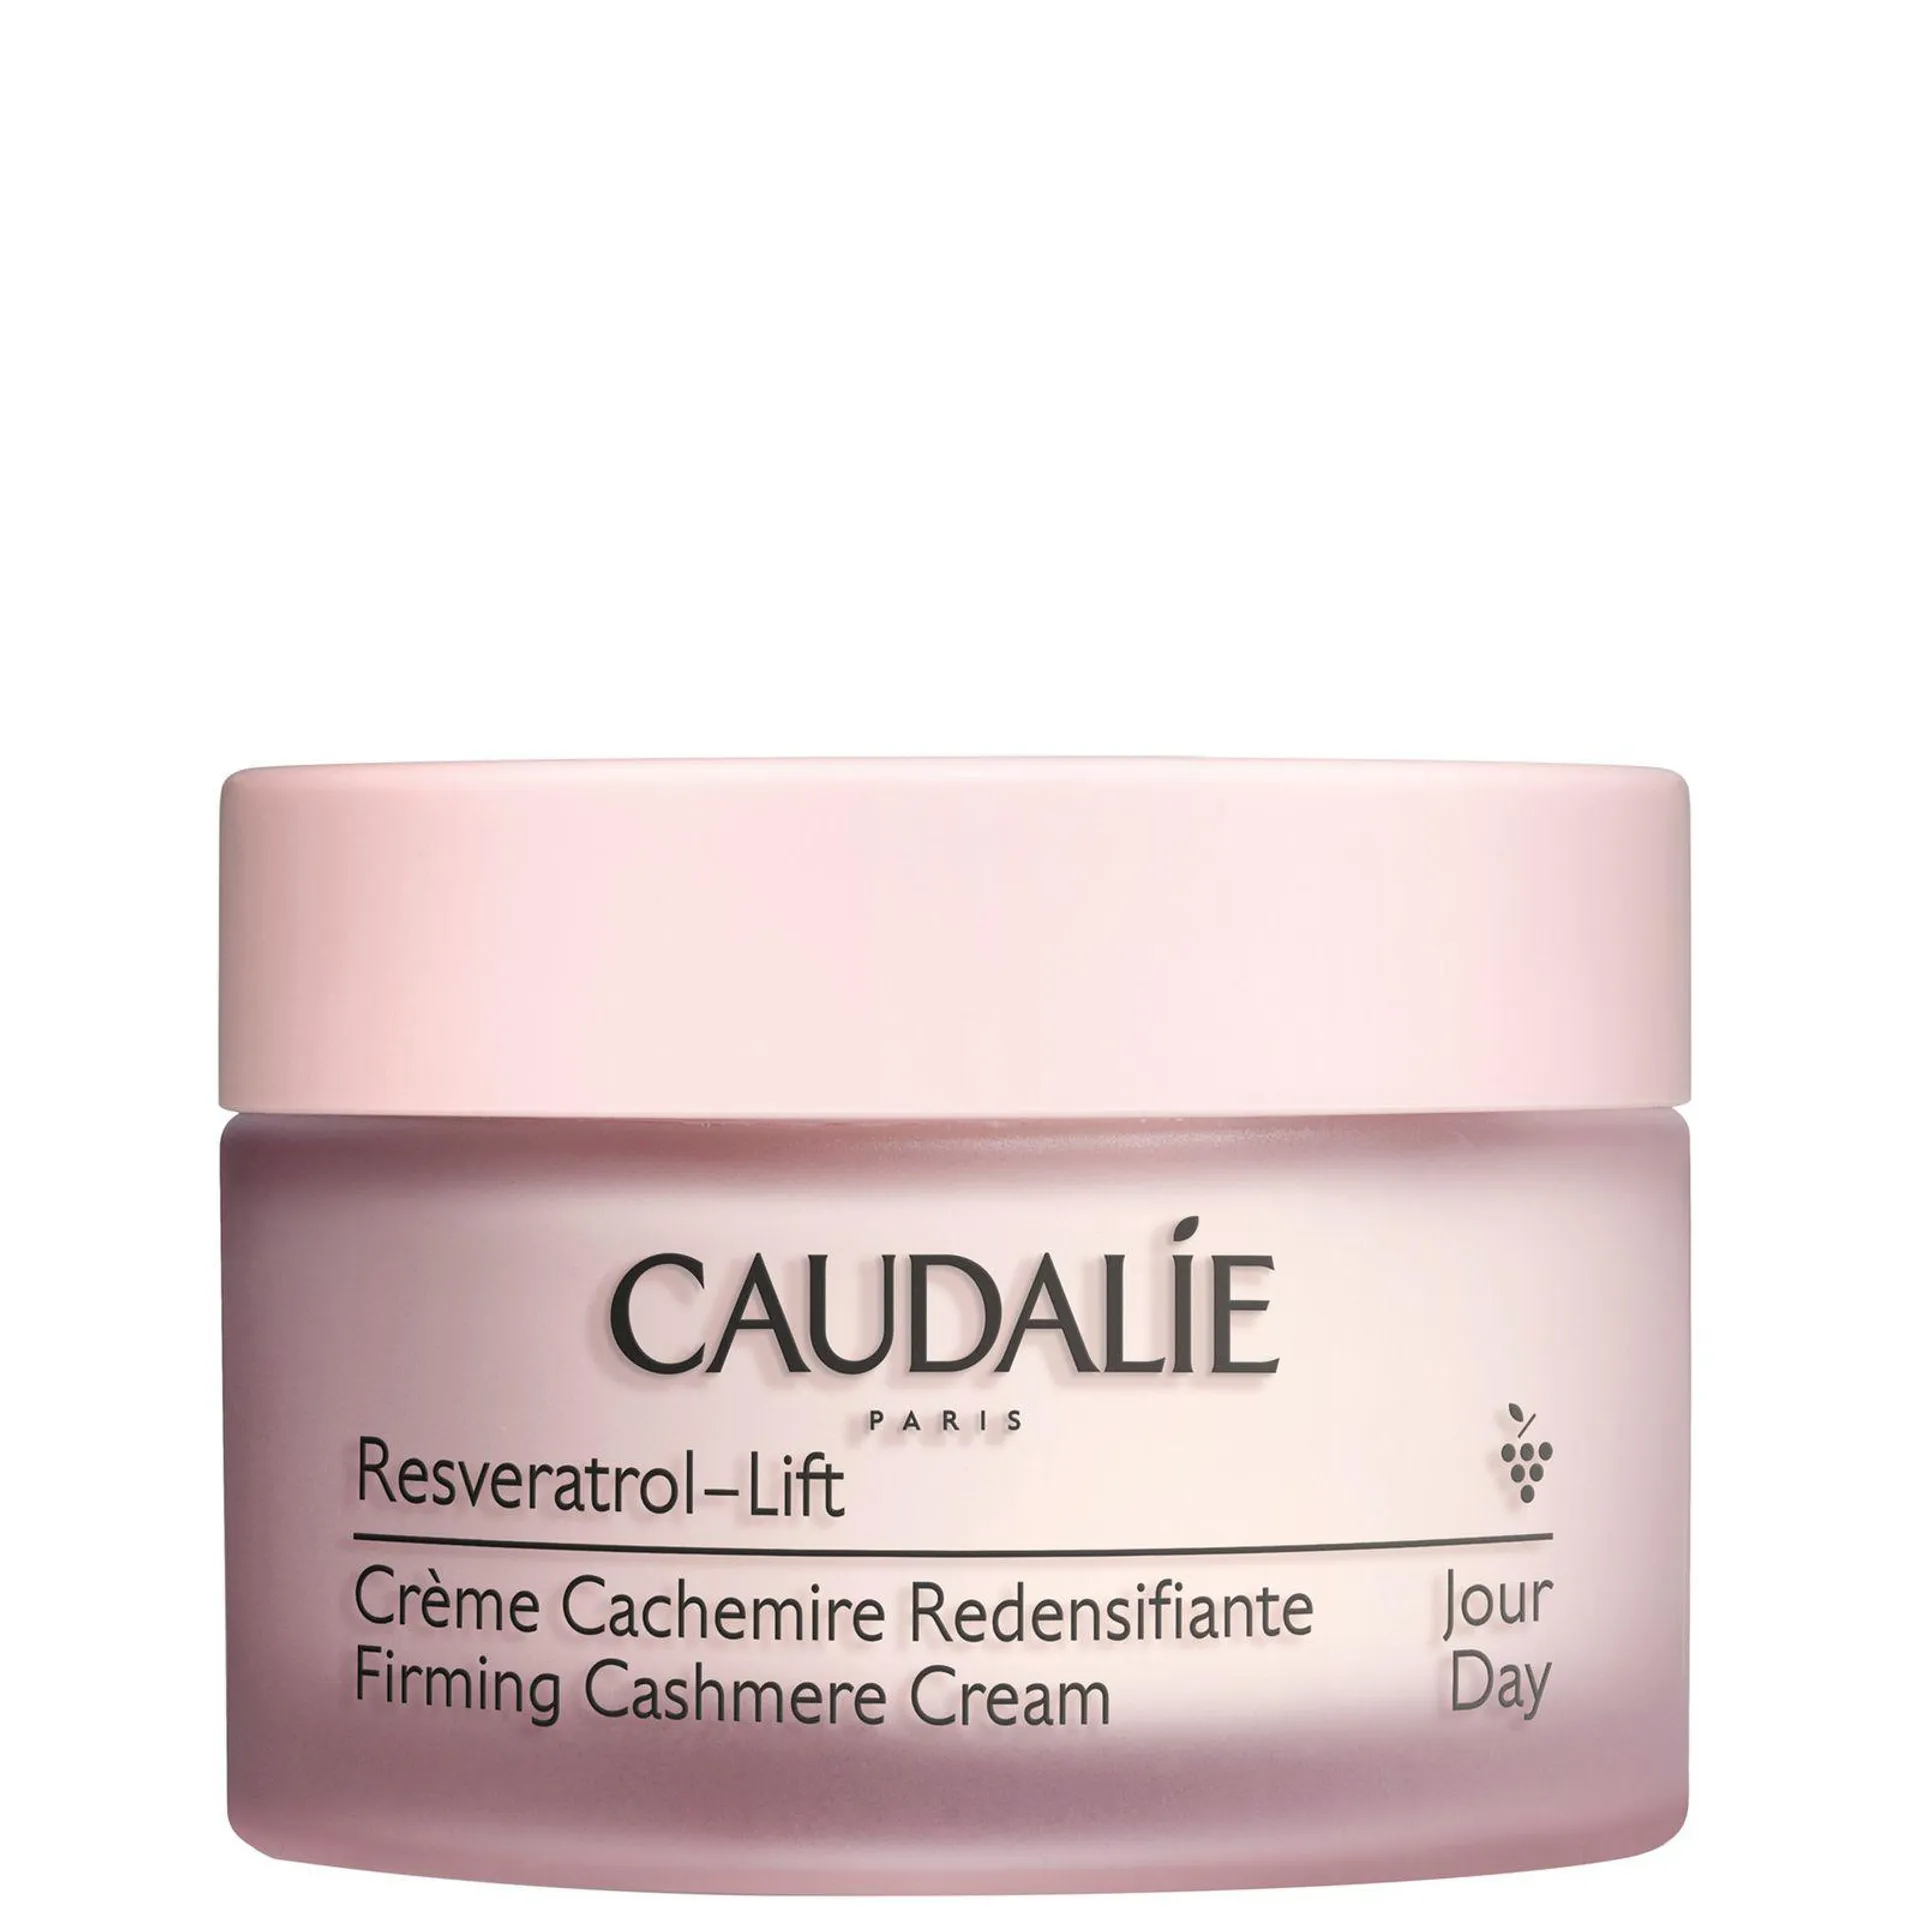 Resveratrol-Lift Firming Cashmere Cream 50ml